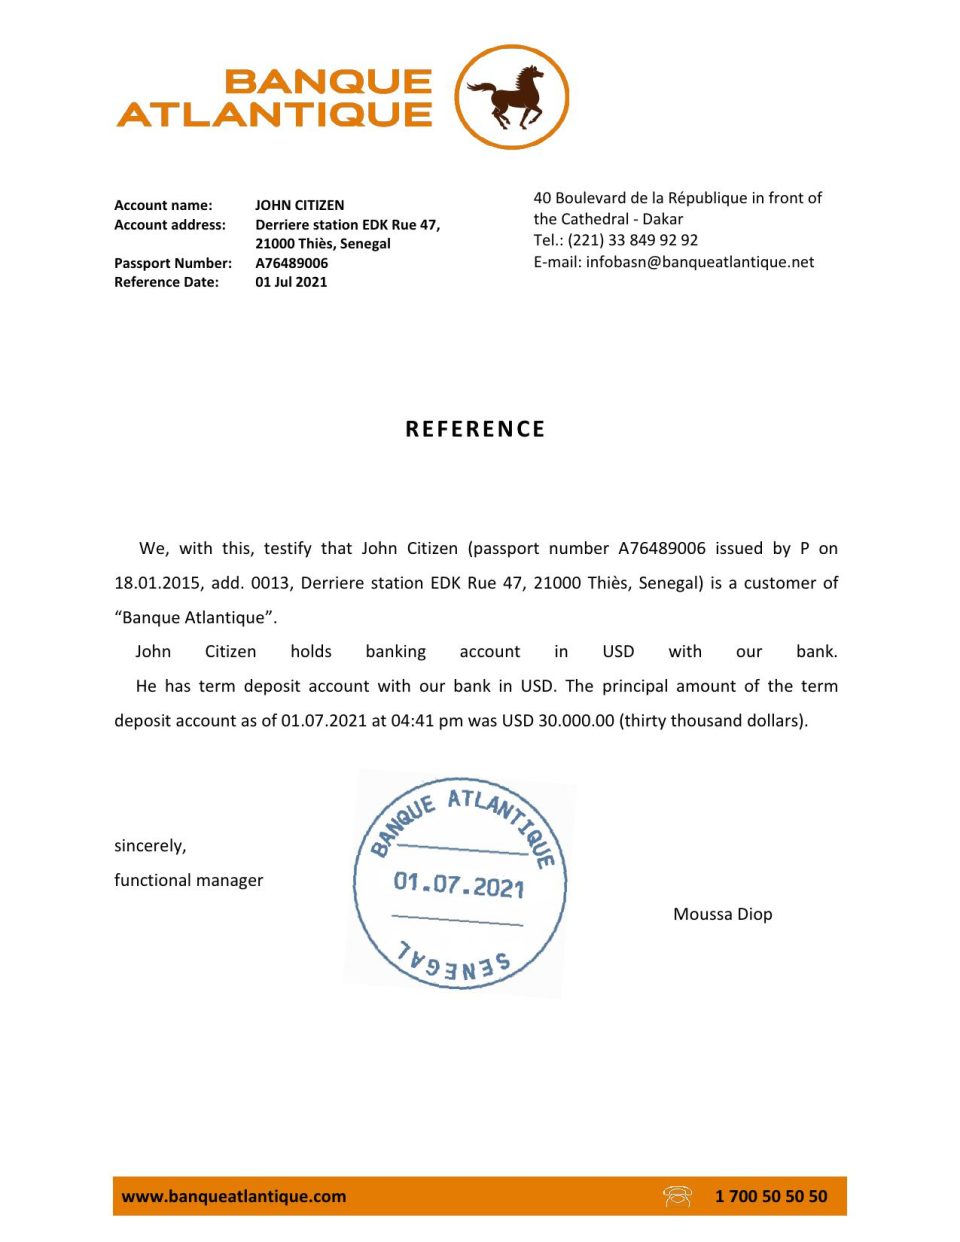 Download Senegal Banque Atlantique Bank Reference Letter Templates | Editable Word